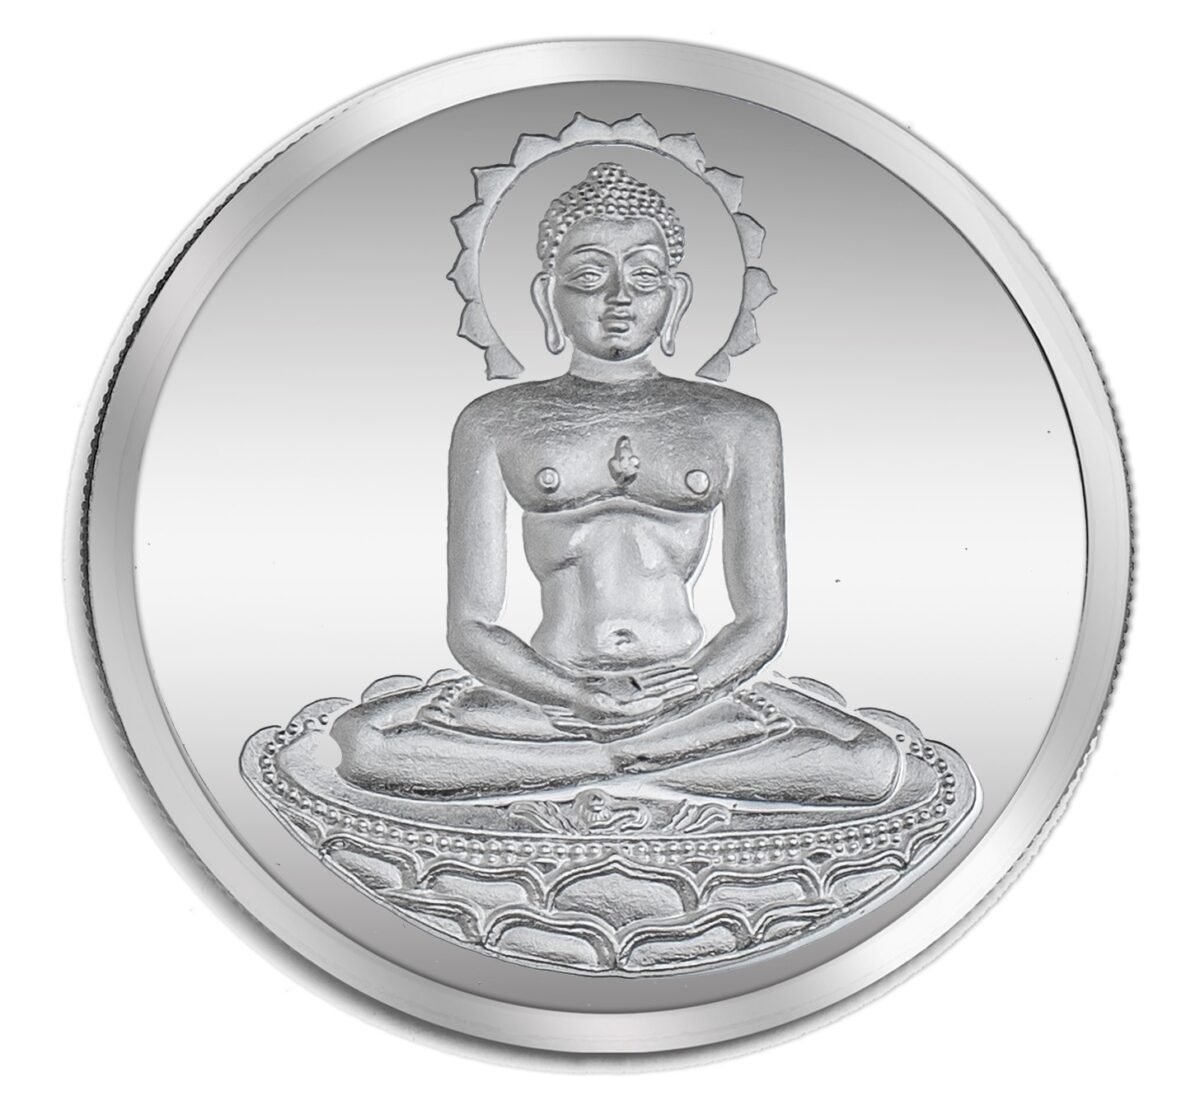 20gm silver coin